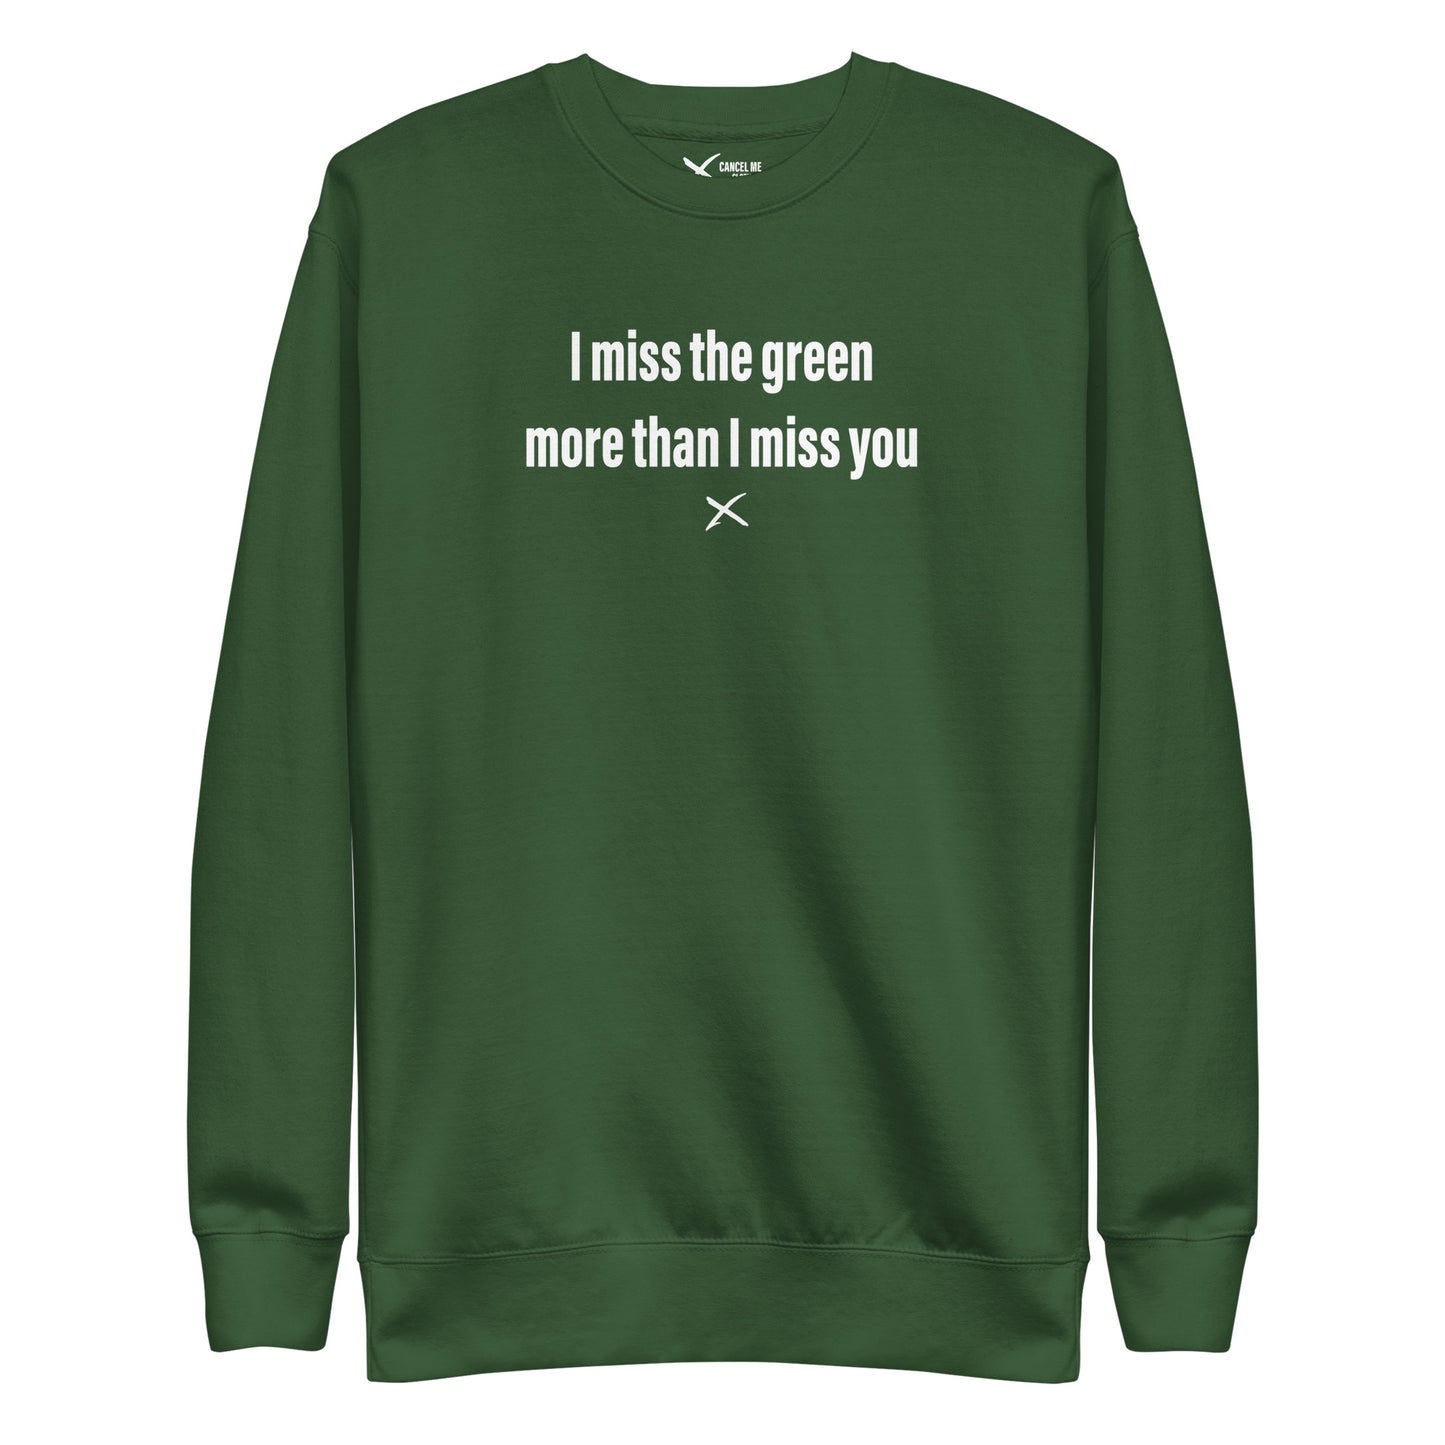 I miss the green more than I miss you - Sweatshirt